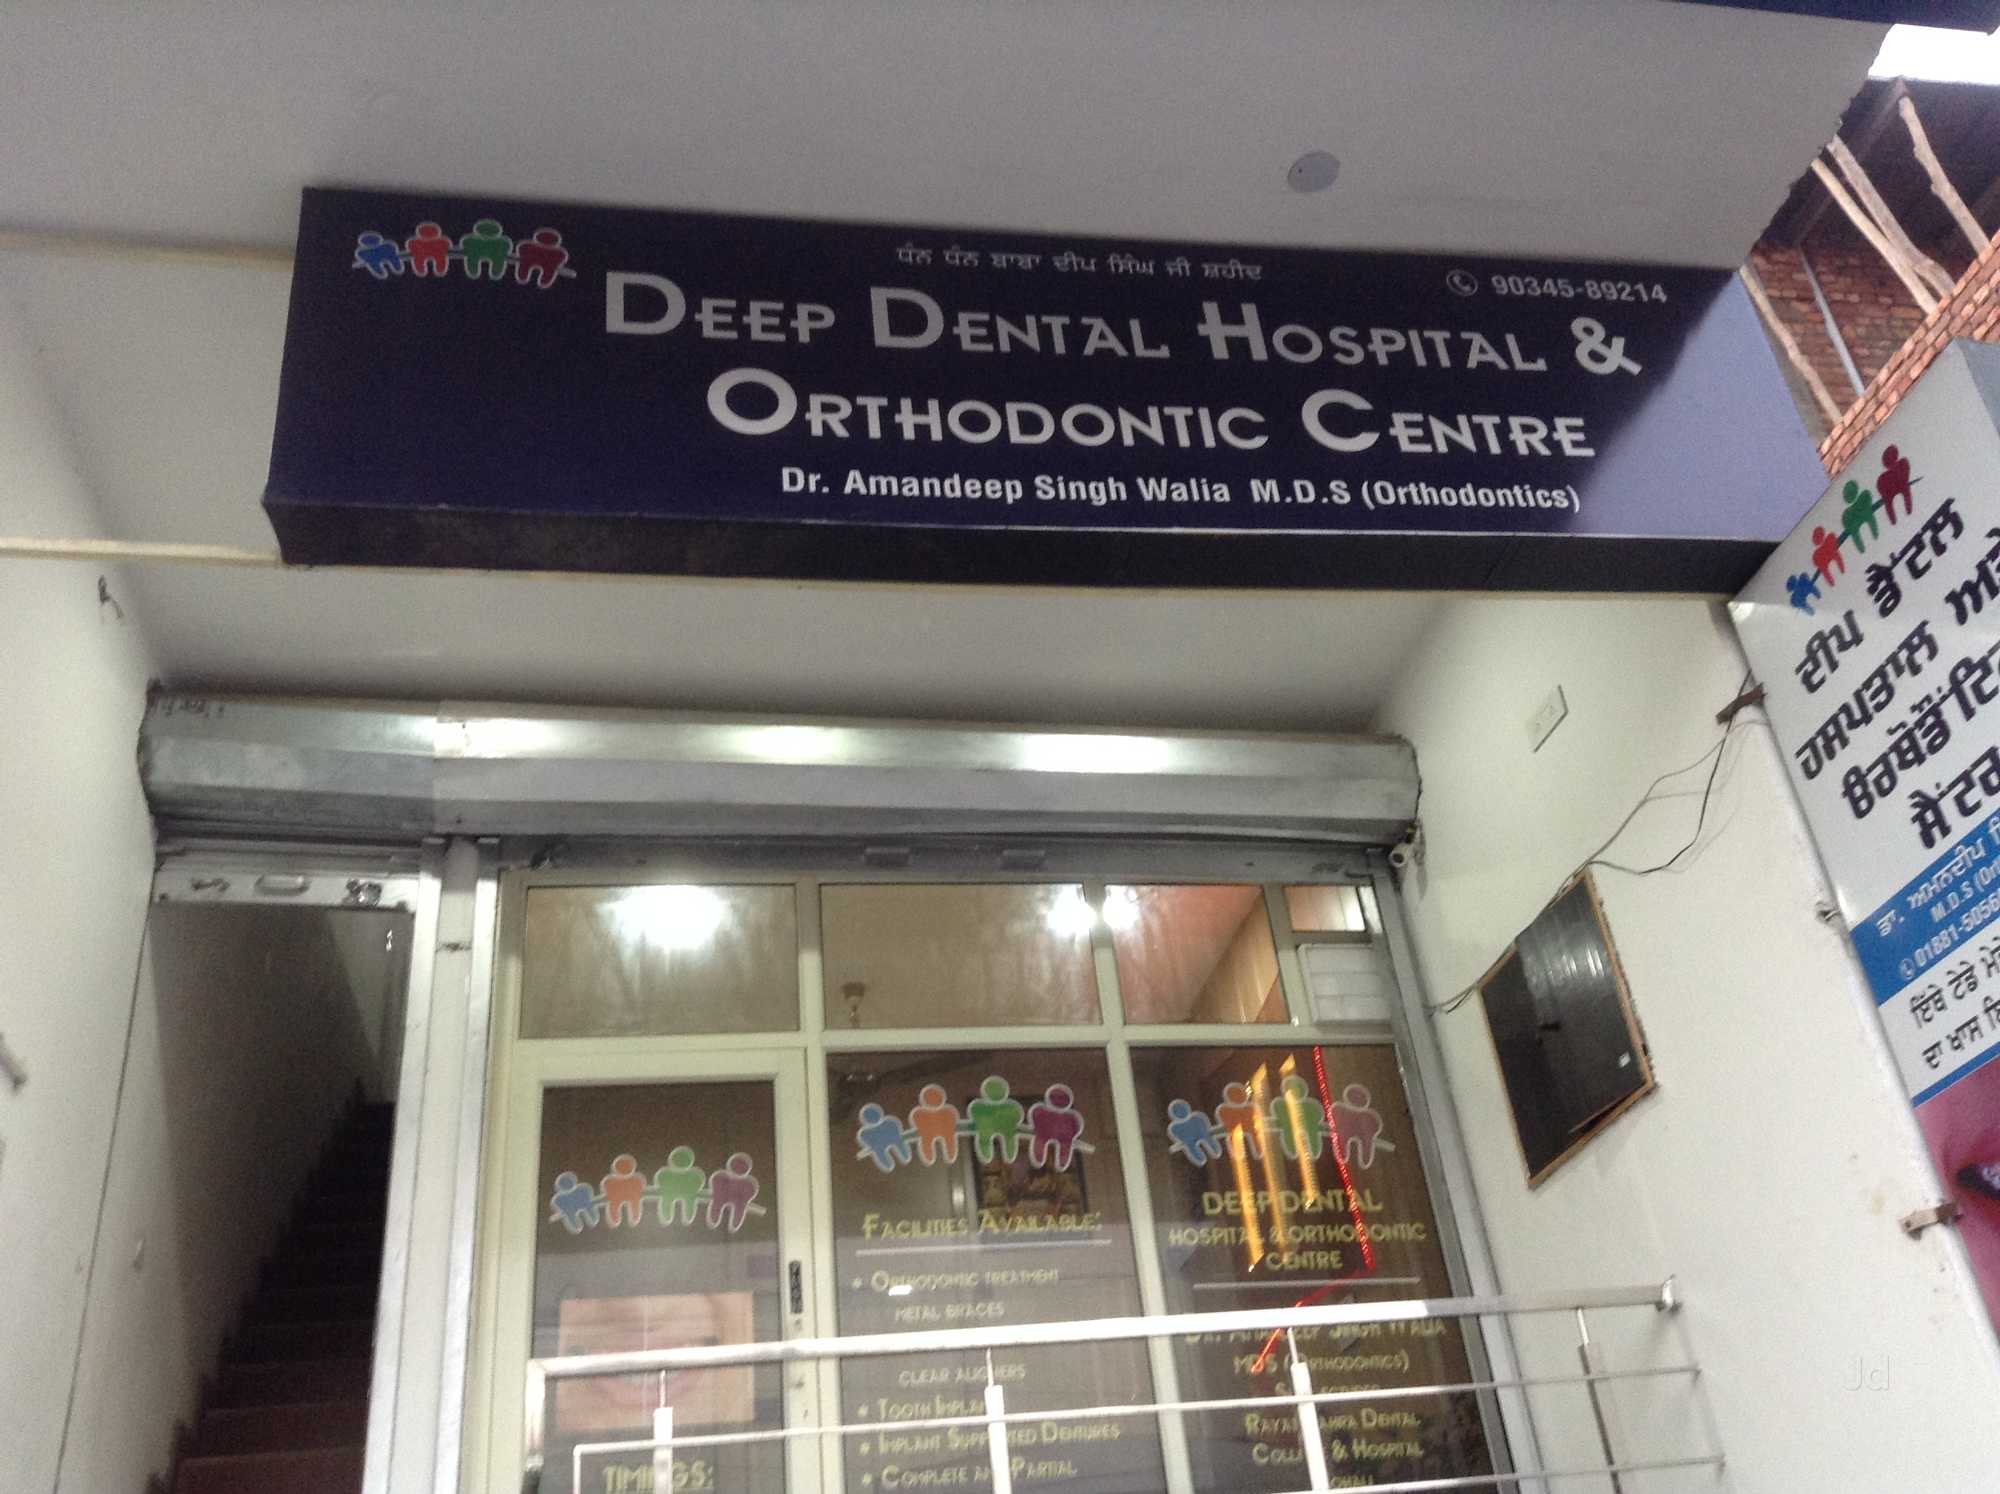 Deep Dental Hospital & Orthodontic Centre|Hospitals|Medical Services